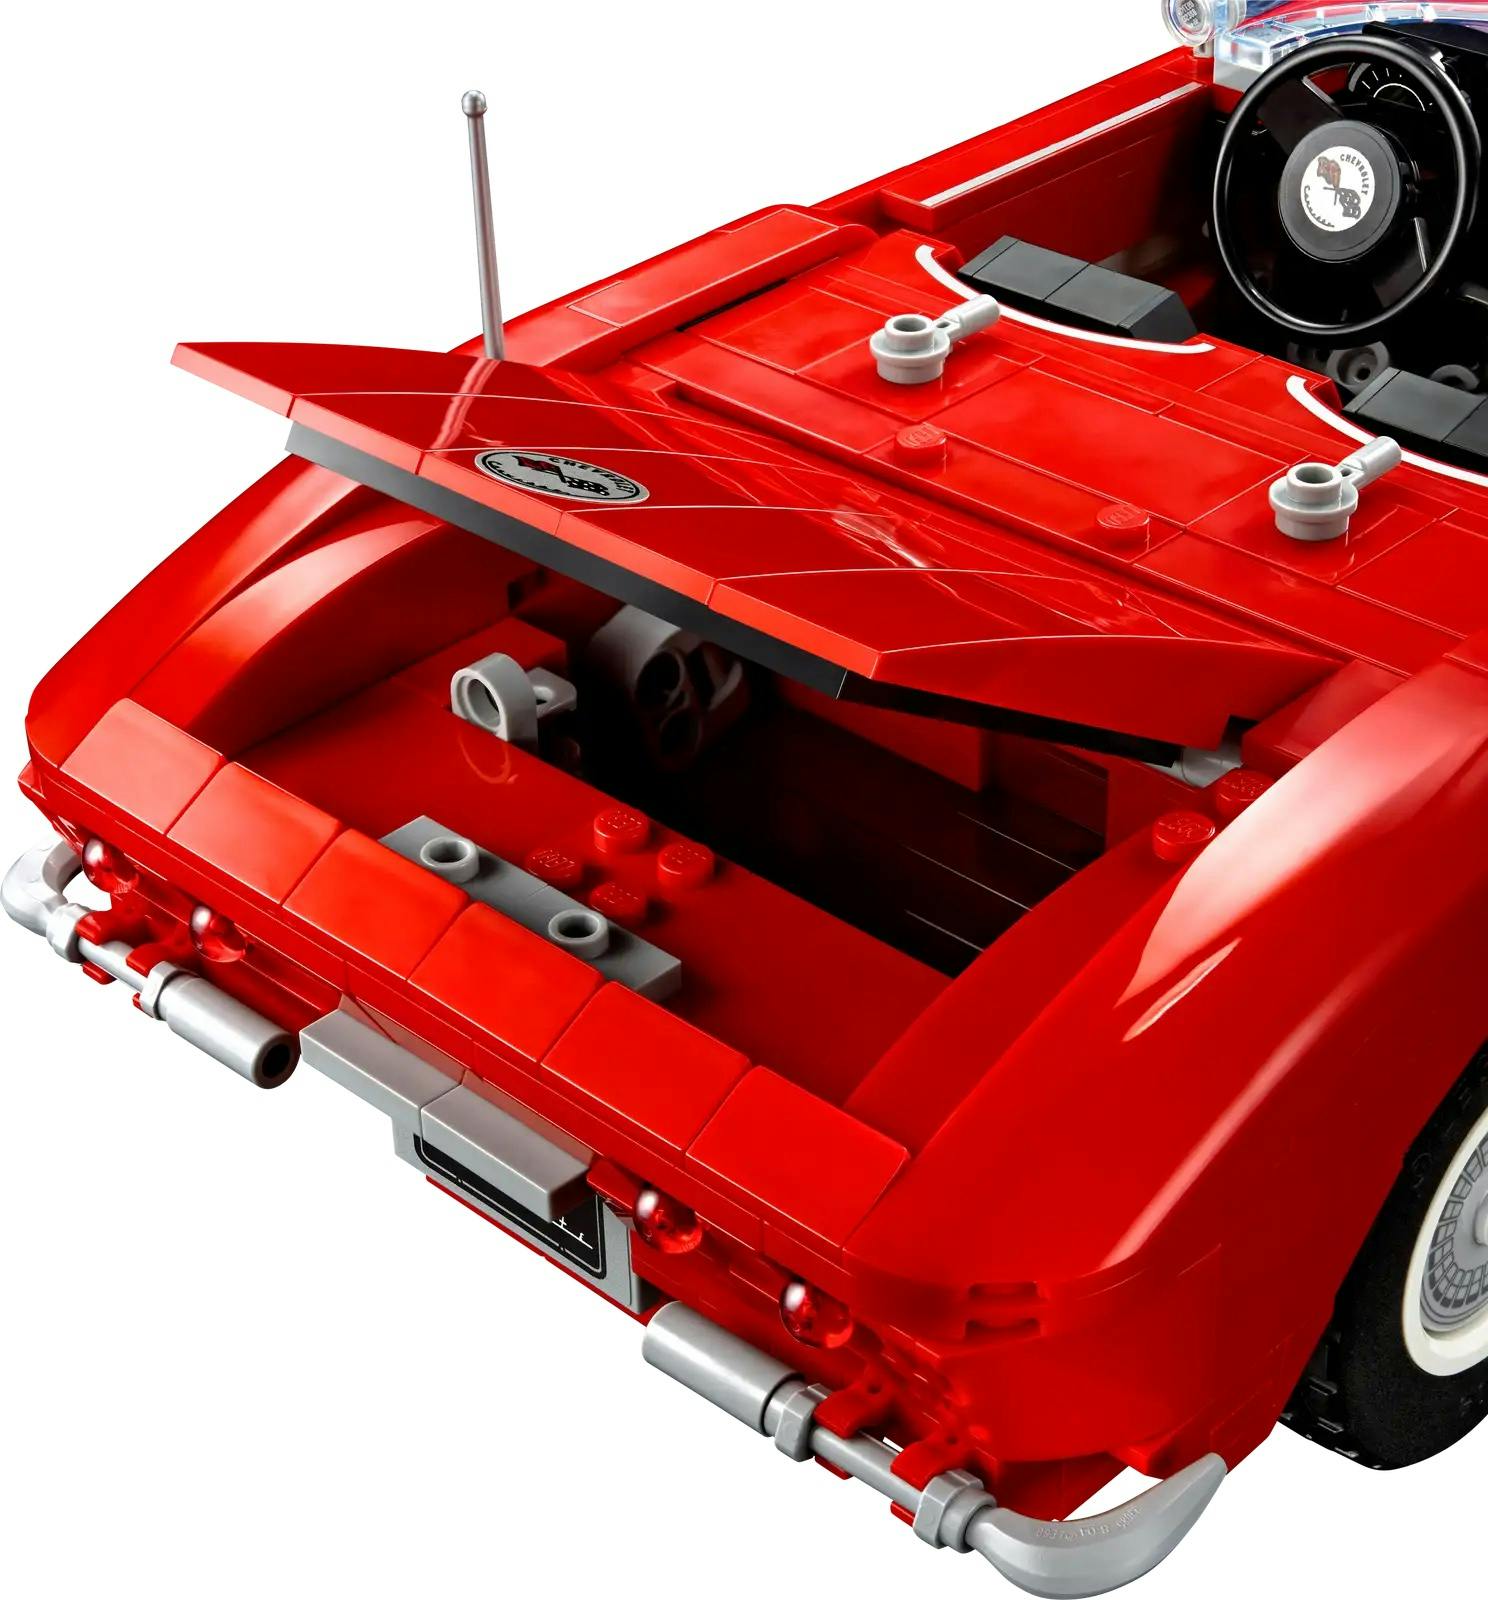 1961 LEGO Corvette trunk